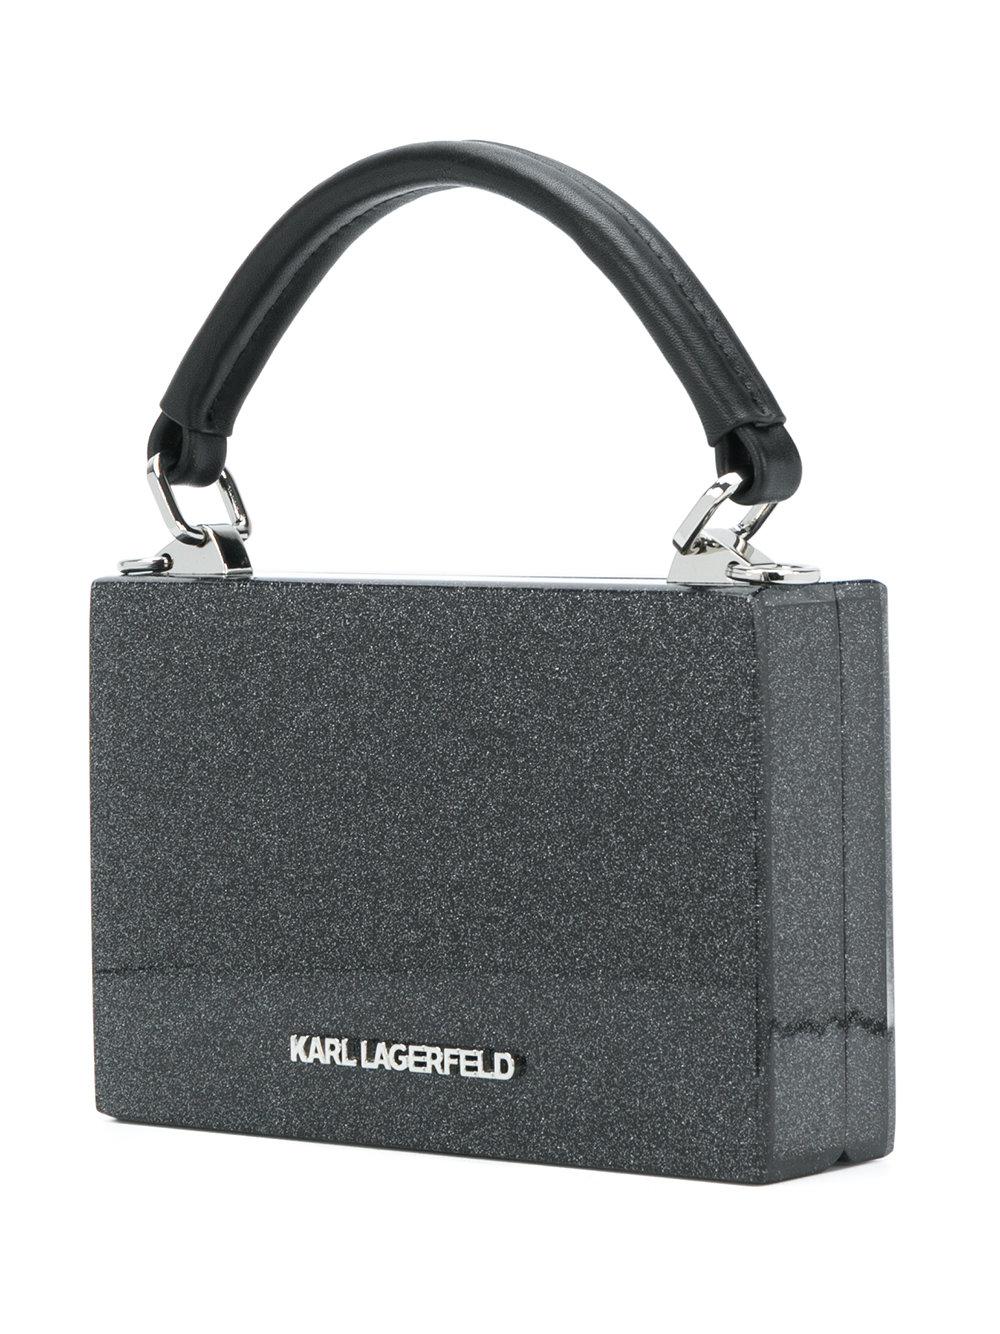 Karl Lagerfeld Synthetic Mini Logo Box Bag in Black - Lyst